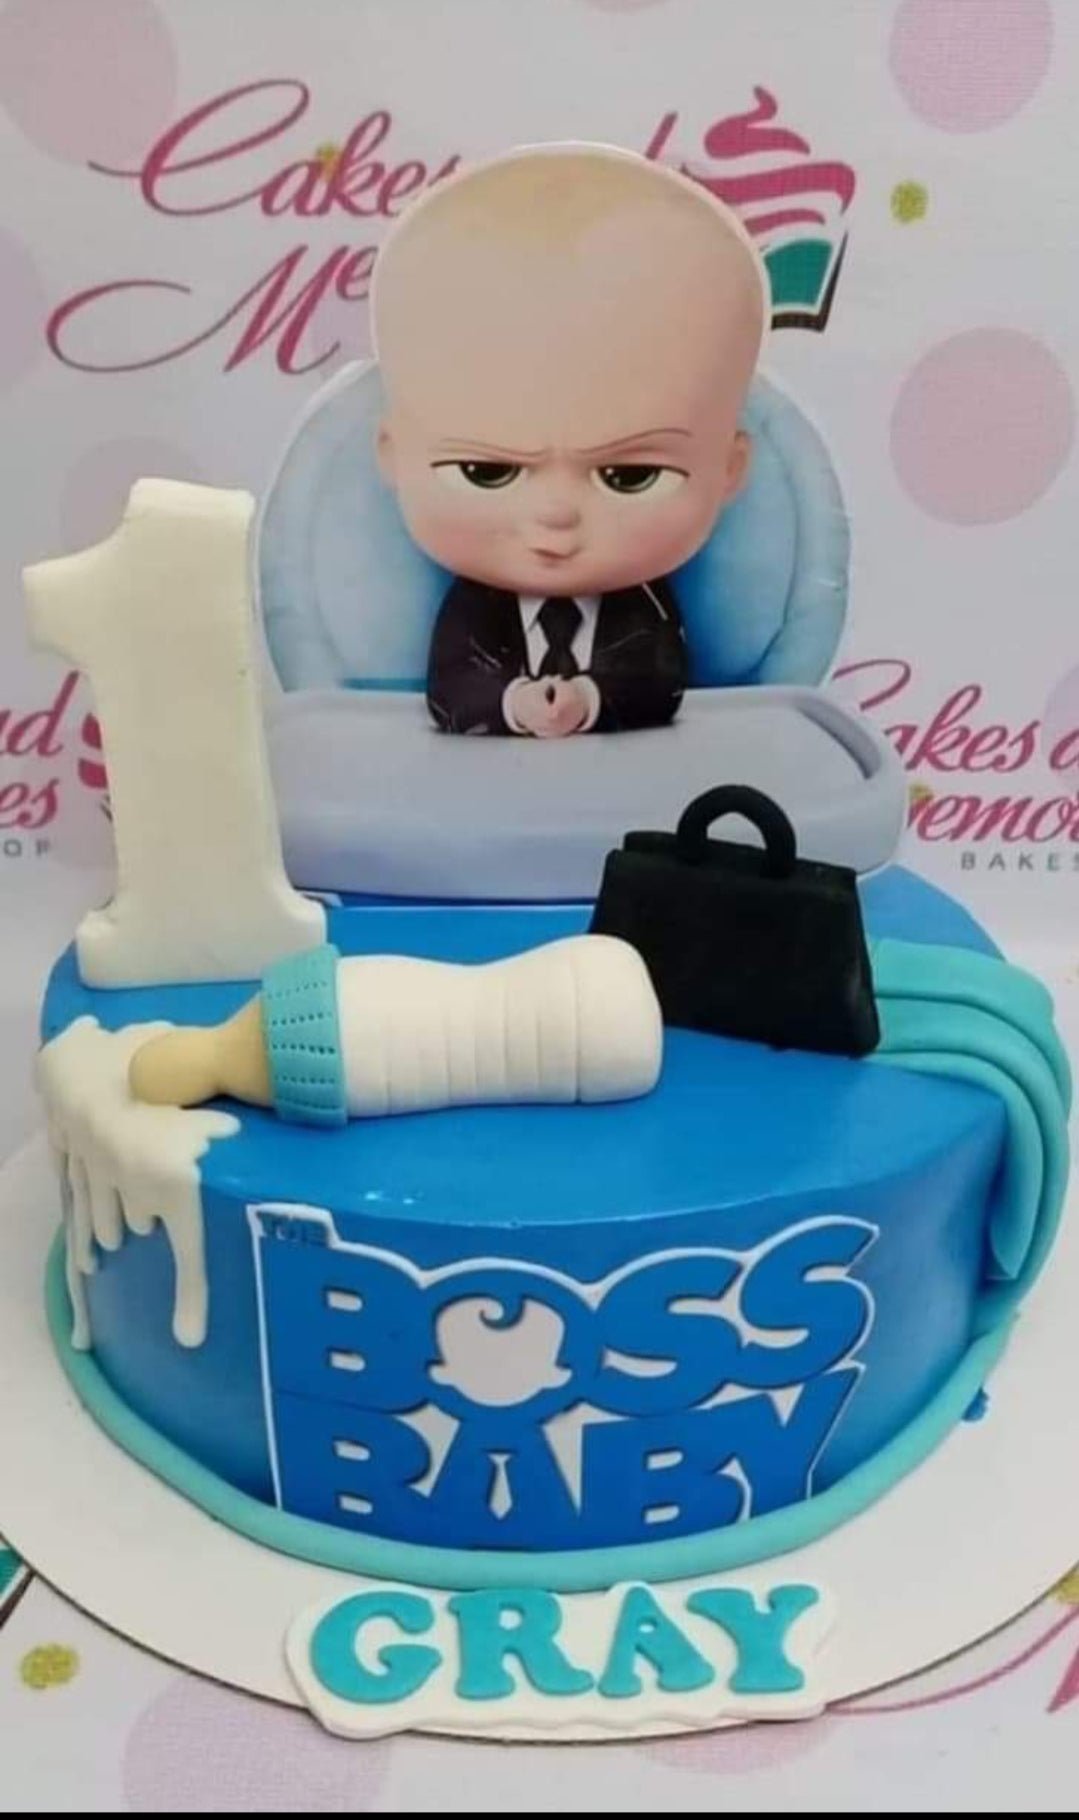 Boss baby theme cake, Food & Drinks, Homemade Bakes on Carousell